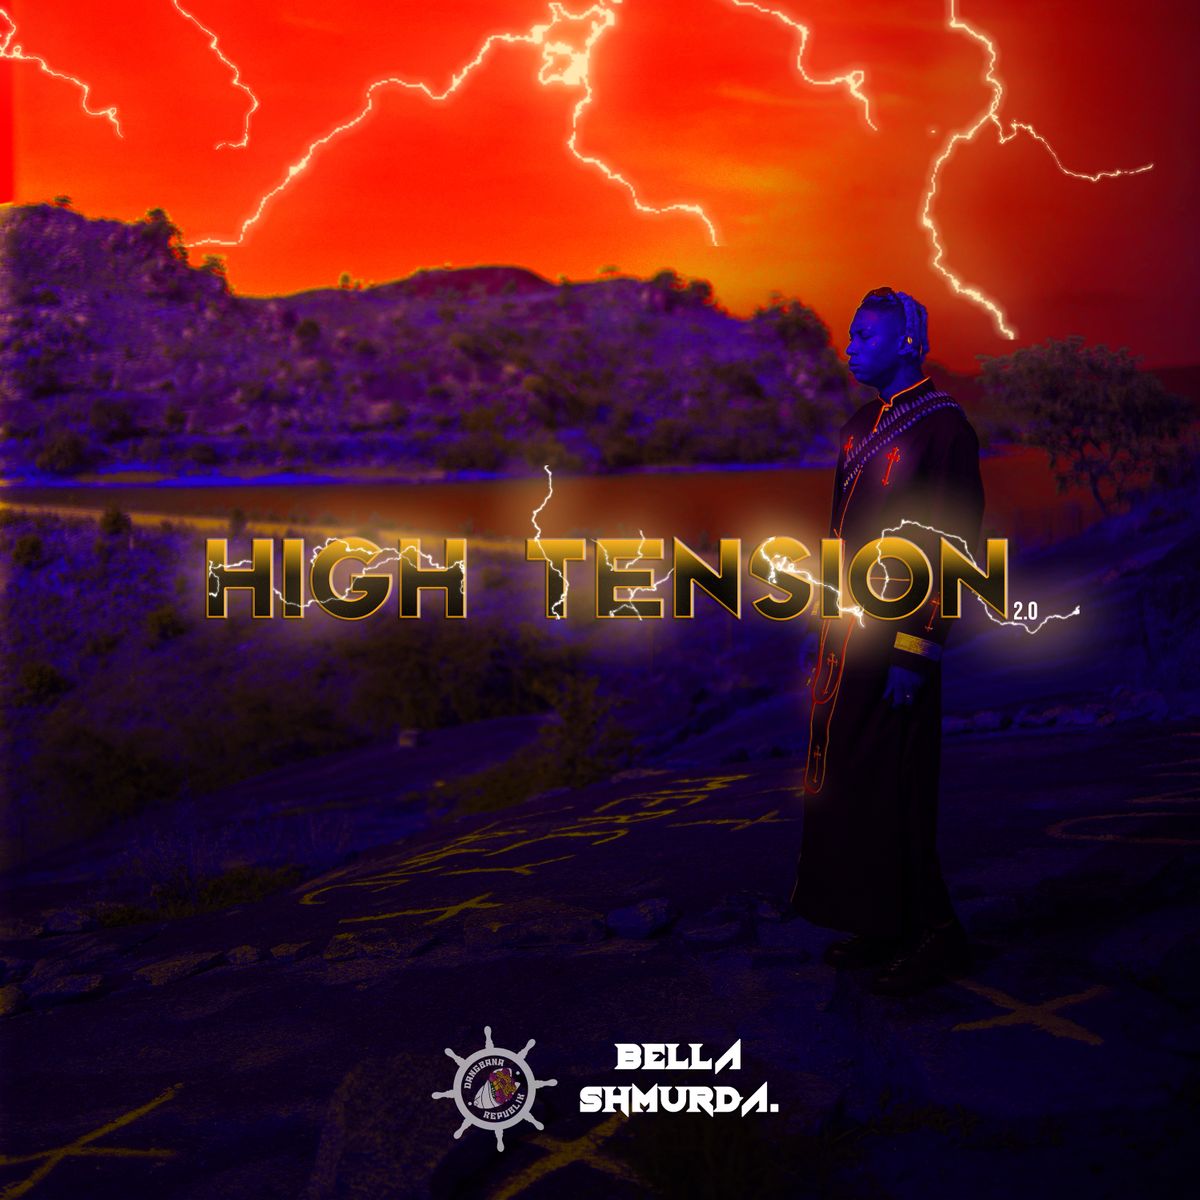 Bella Shmurda – "High Tension 2.0" EP